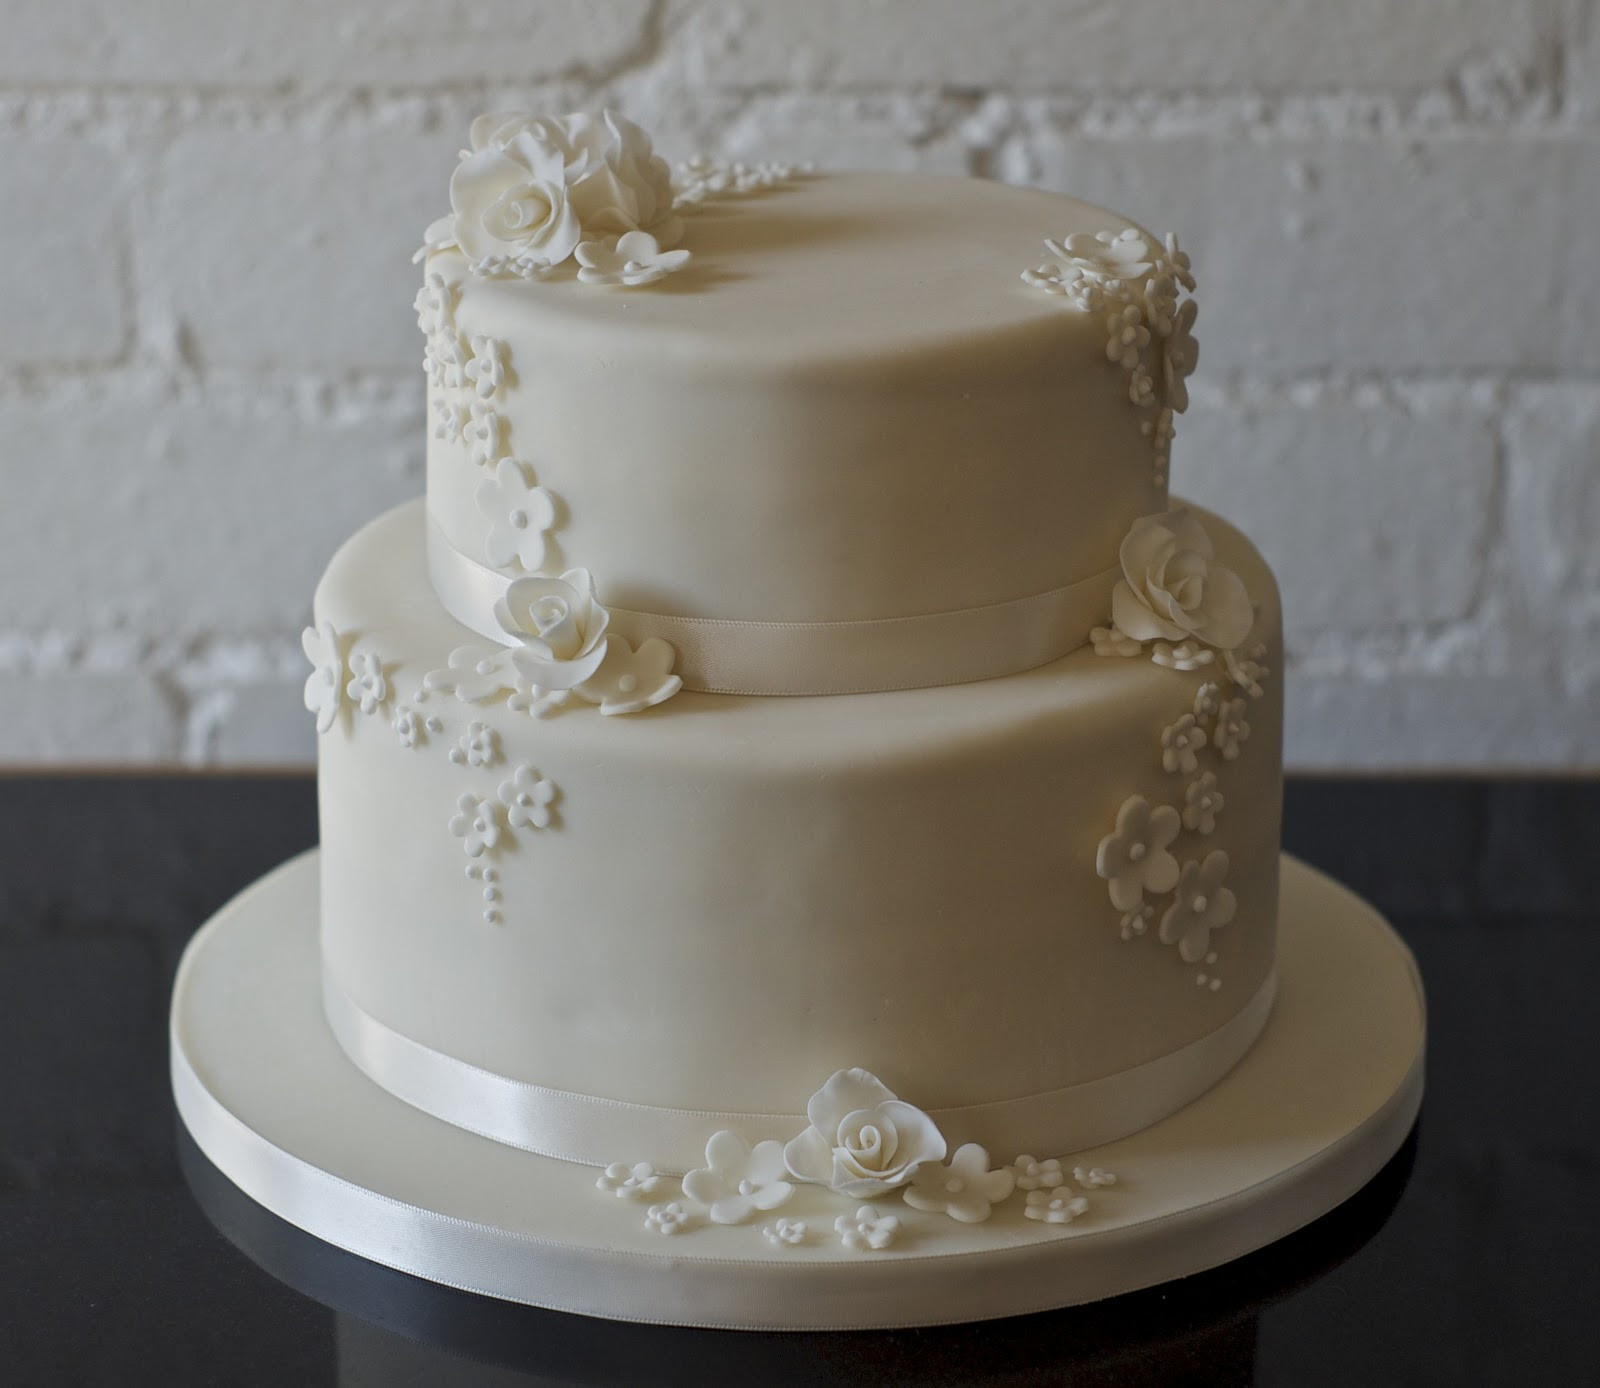 2 Tier Wedding Cake
 REAL LIFE Rose and blossom 2 tier wedding cake